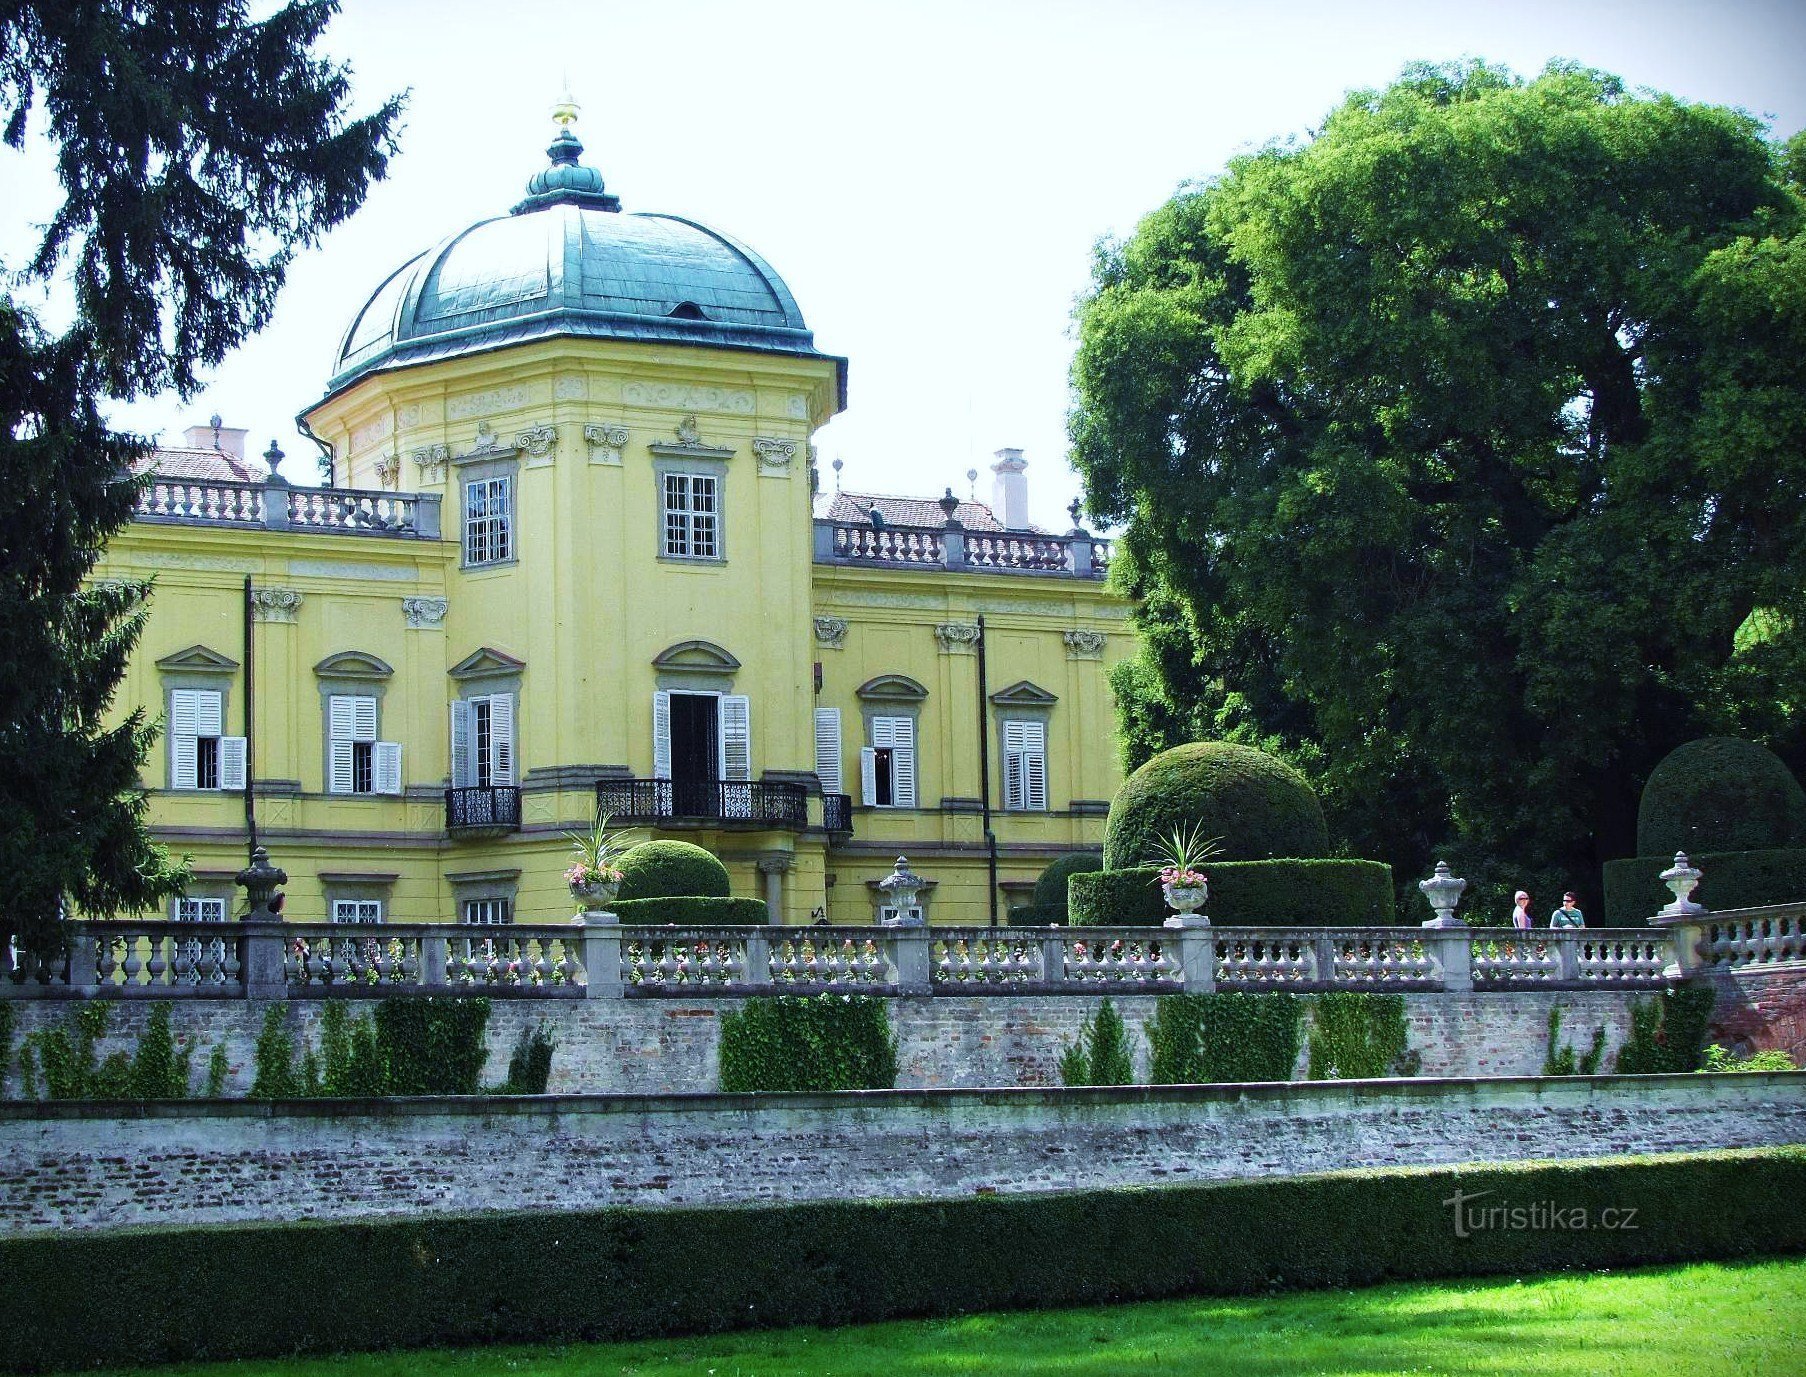 Romantični vrt dvorca s pejzažnim parkom u Buchlovicama